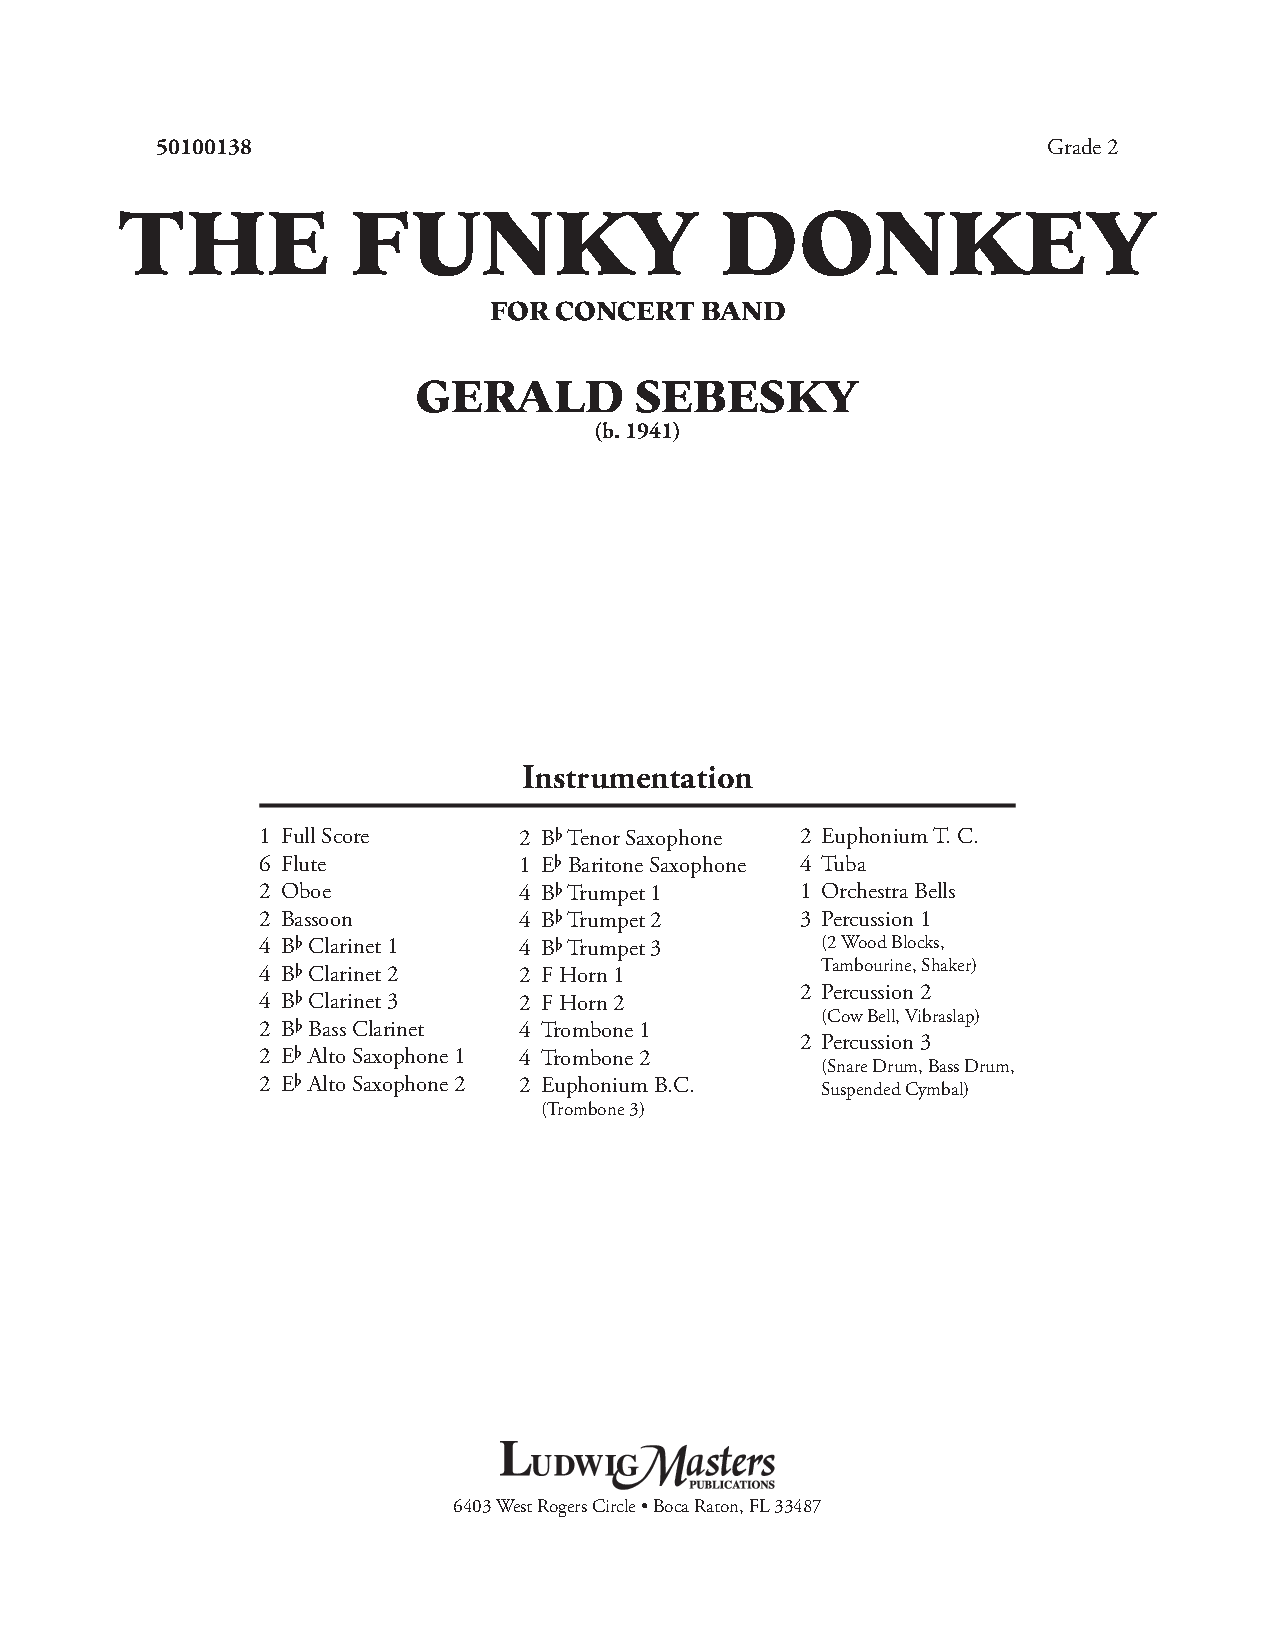 The Funky Donkey